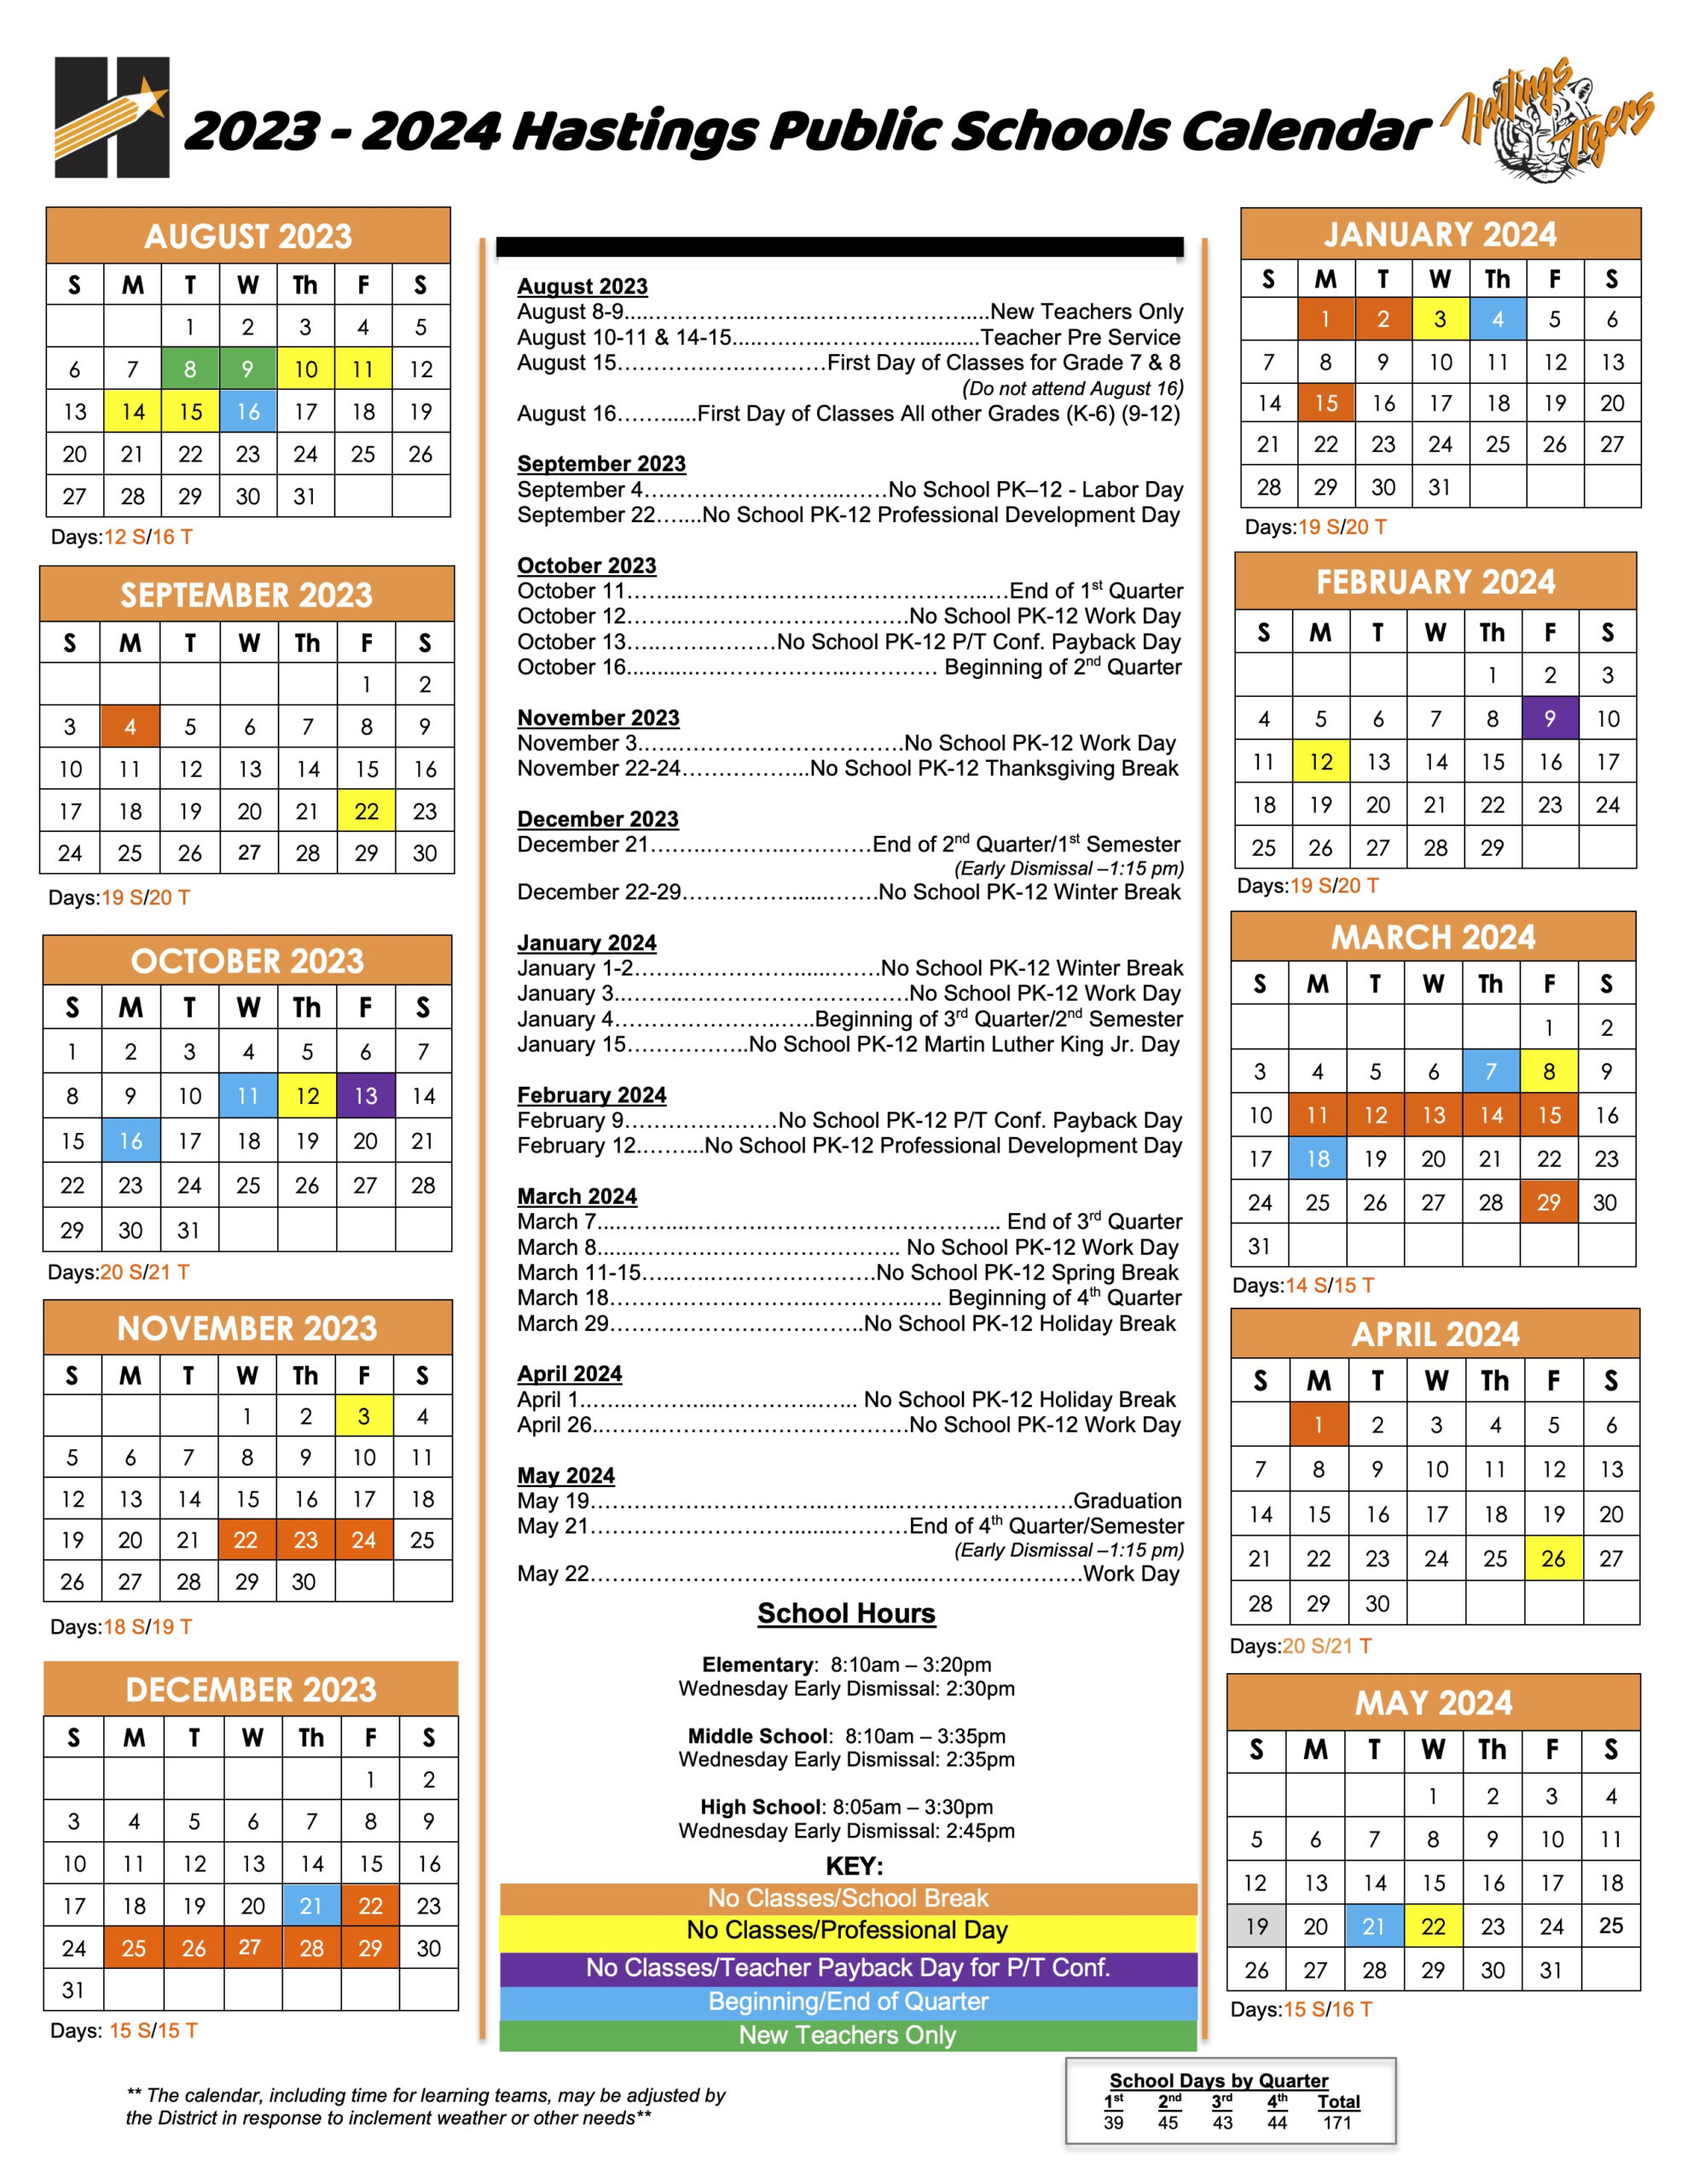 Hastings Public Schools Calendar 2023 Schoolcalendars net